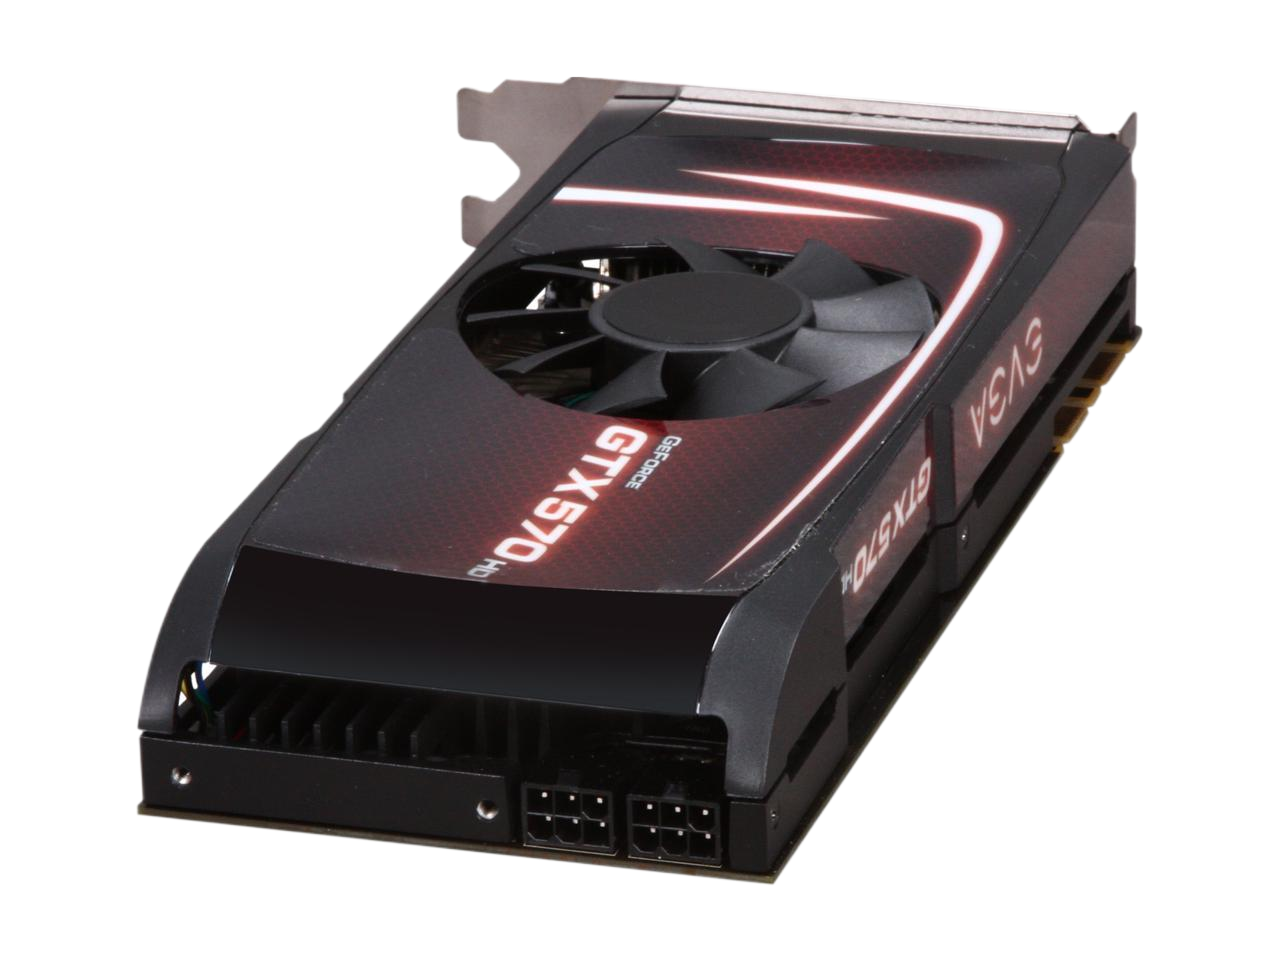 EVGA GeForce GTX 570 1280MB GDDR5 PCI Express 2.0 x16 SLI Support Video Card 012-P3-1570-AR